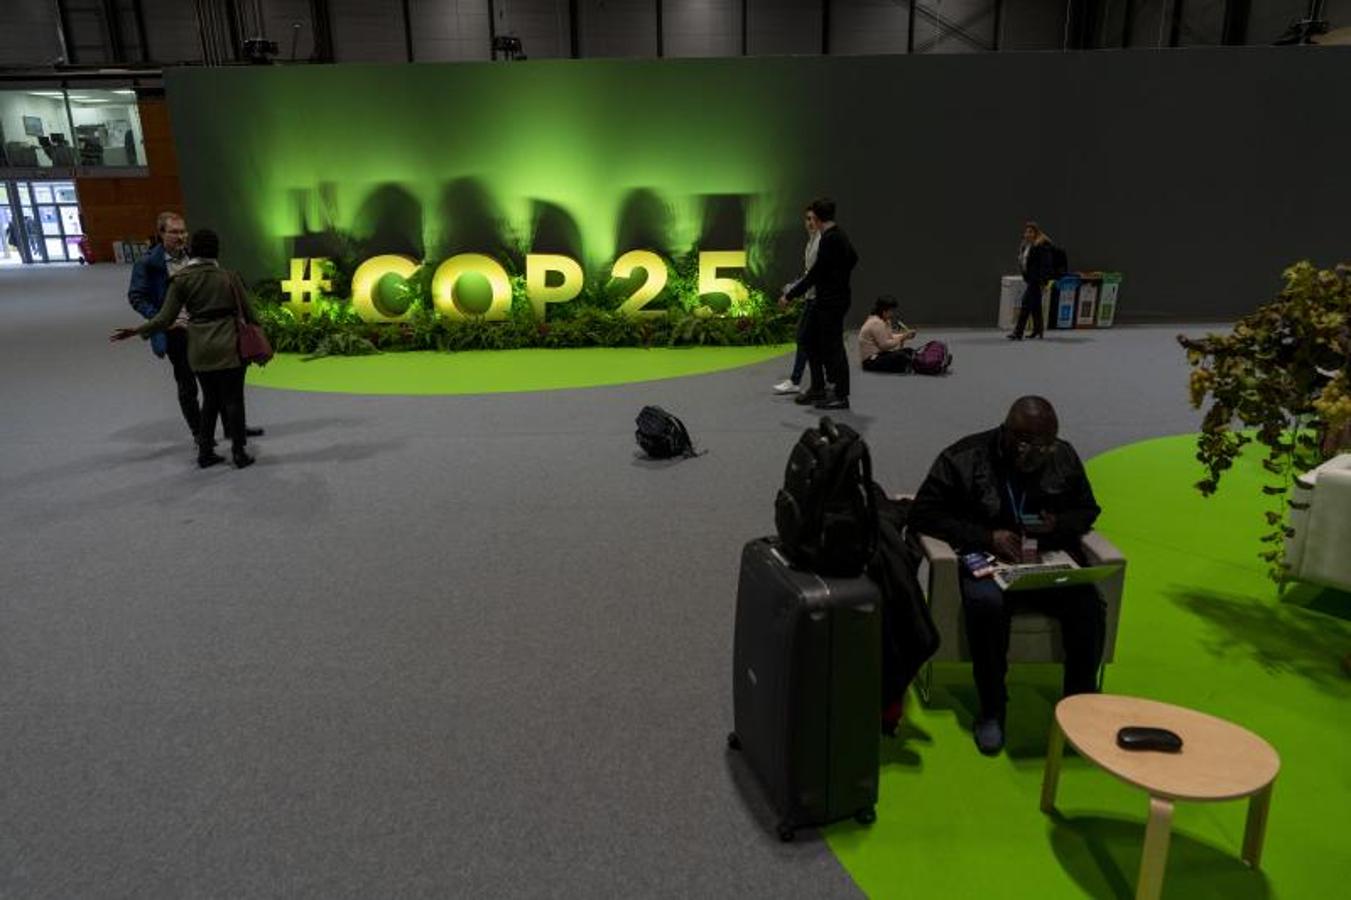 La jornada inaugural de la Cumbre del Clima (COP25) en Madrid, en imágenes